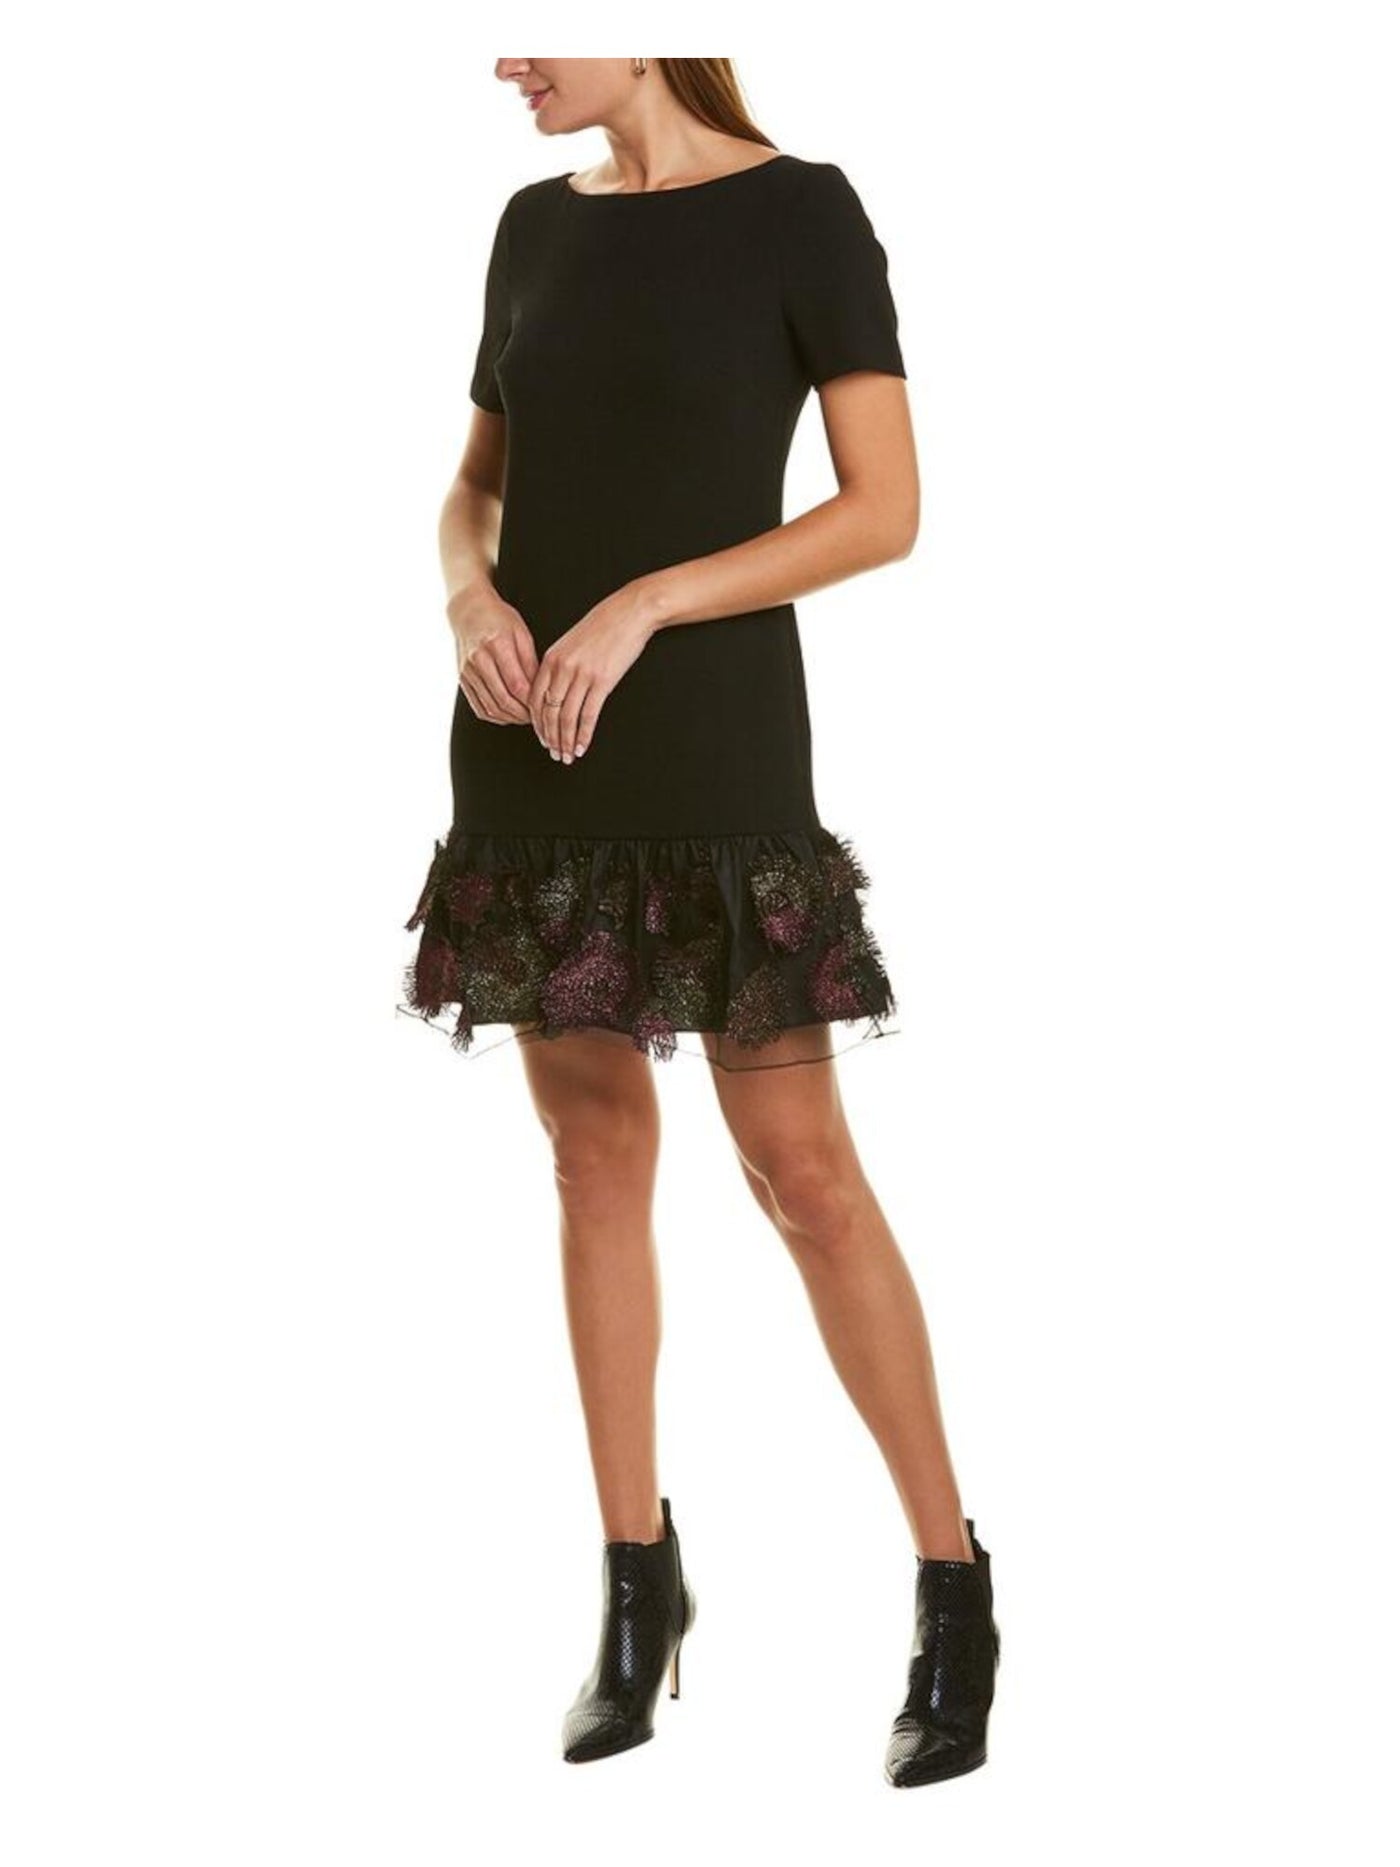 TRINA TURK Womens Black Sheer Shimmering Patterned Short Sleeve Jewel Neck Short Party Fit + Flare Dress 0